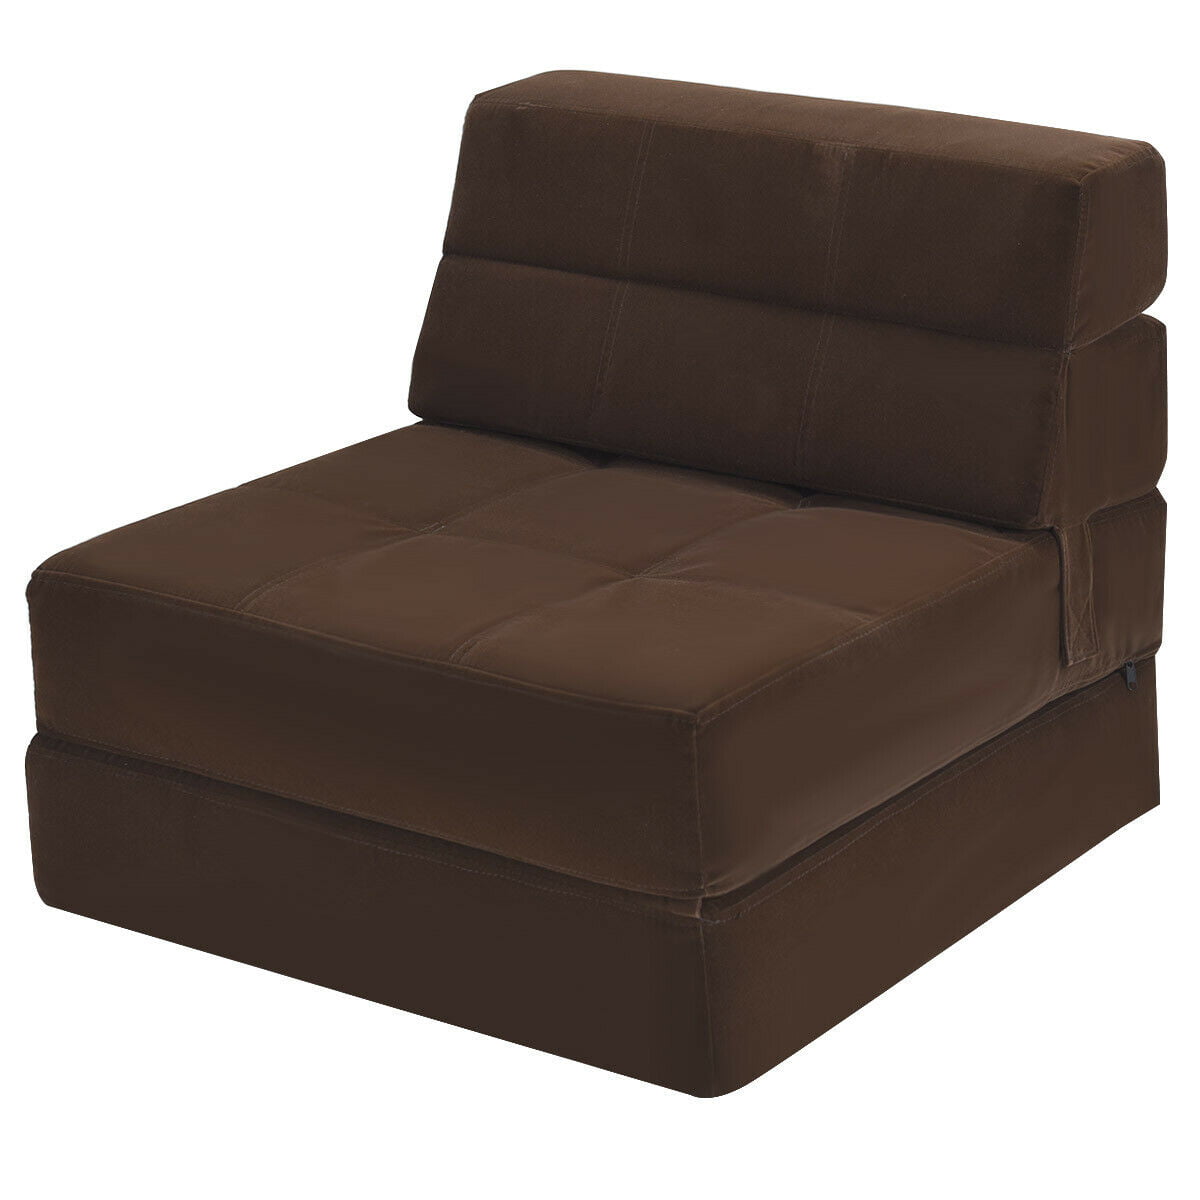 Costway Tri Fold Fold Down Chair Flip Out Lounger Convertible Sleeper Bed Couch Dorm Walmart Com Walmart Com